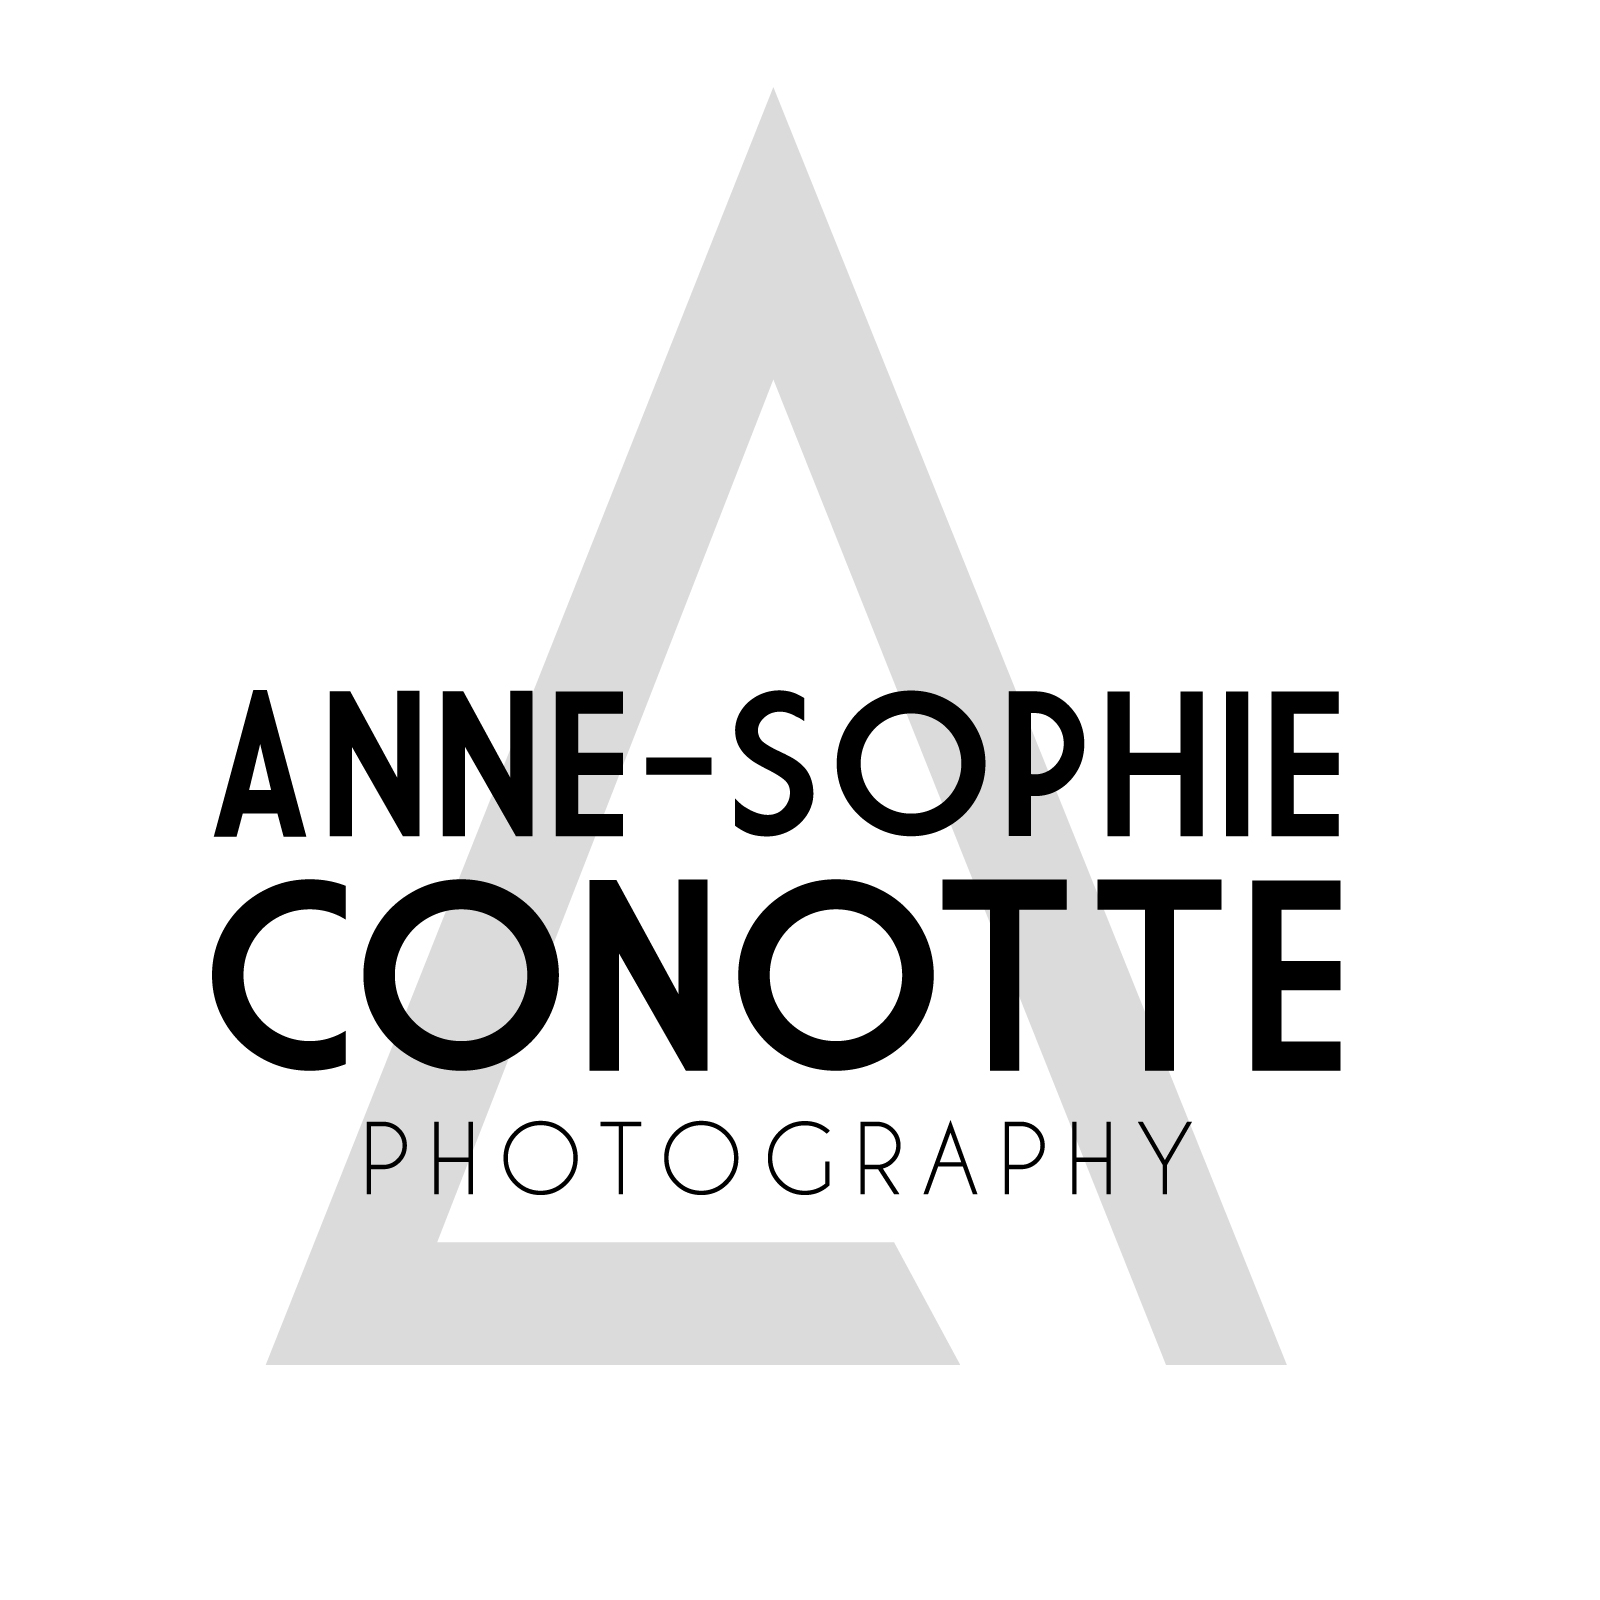 Anne-Sophie Conotte